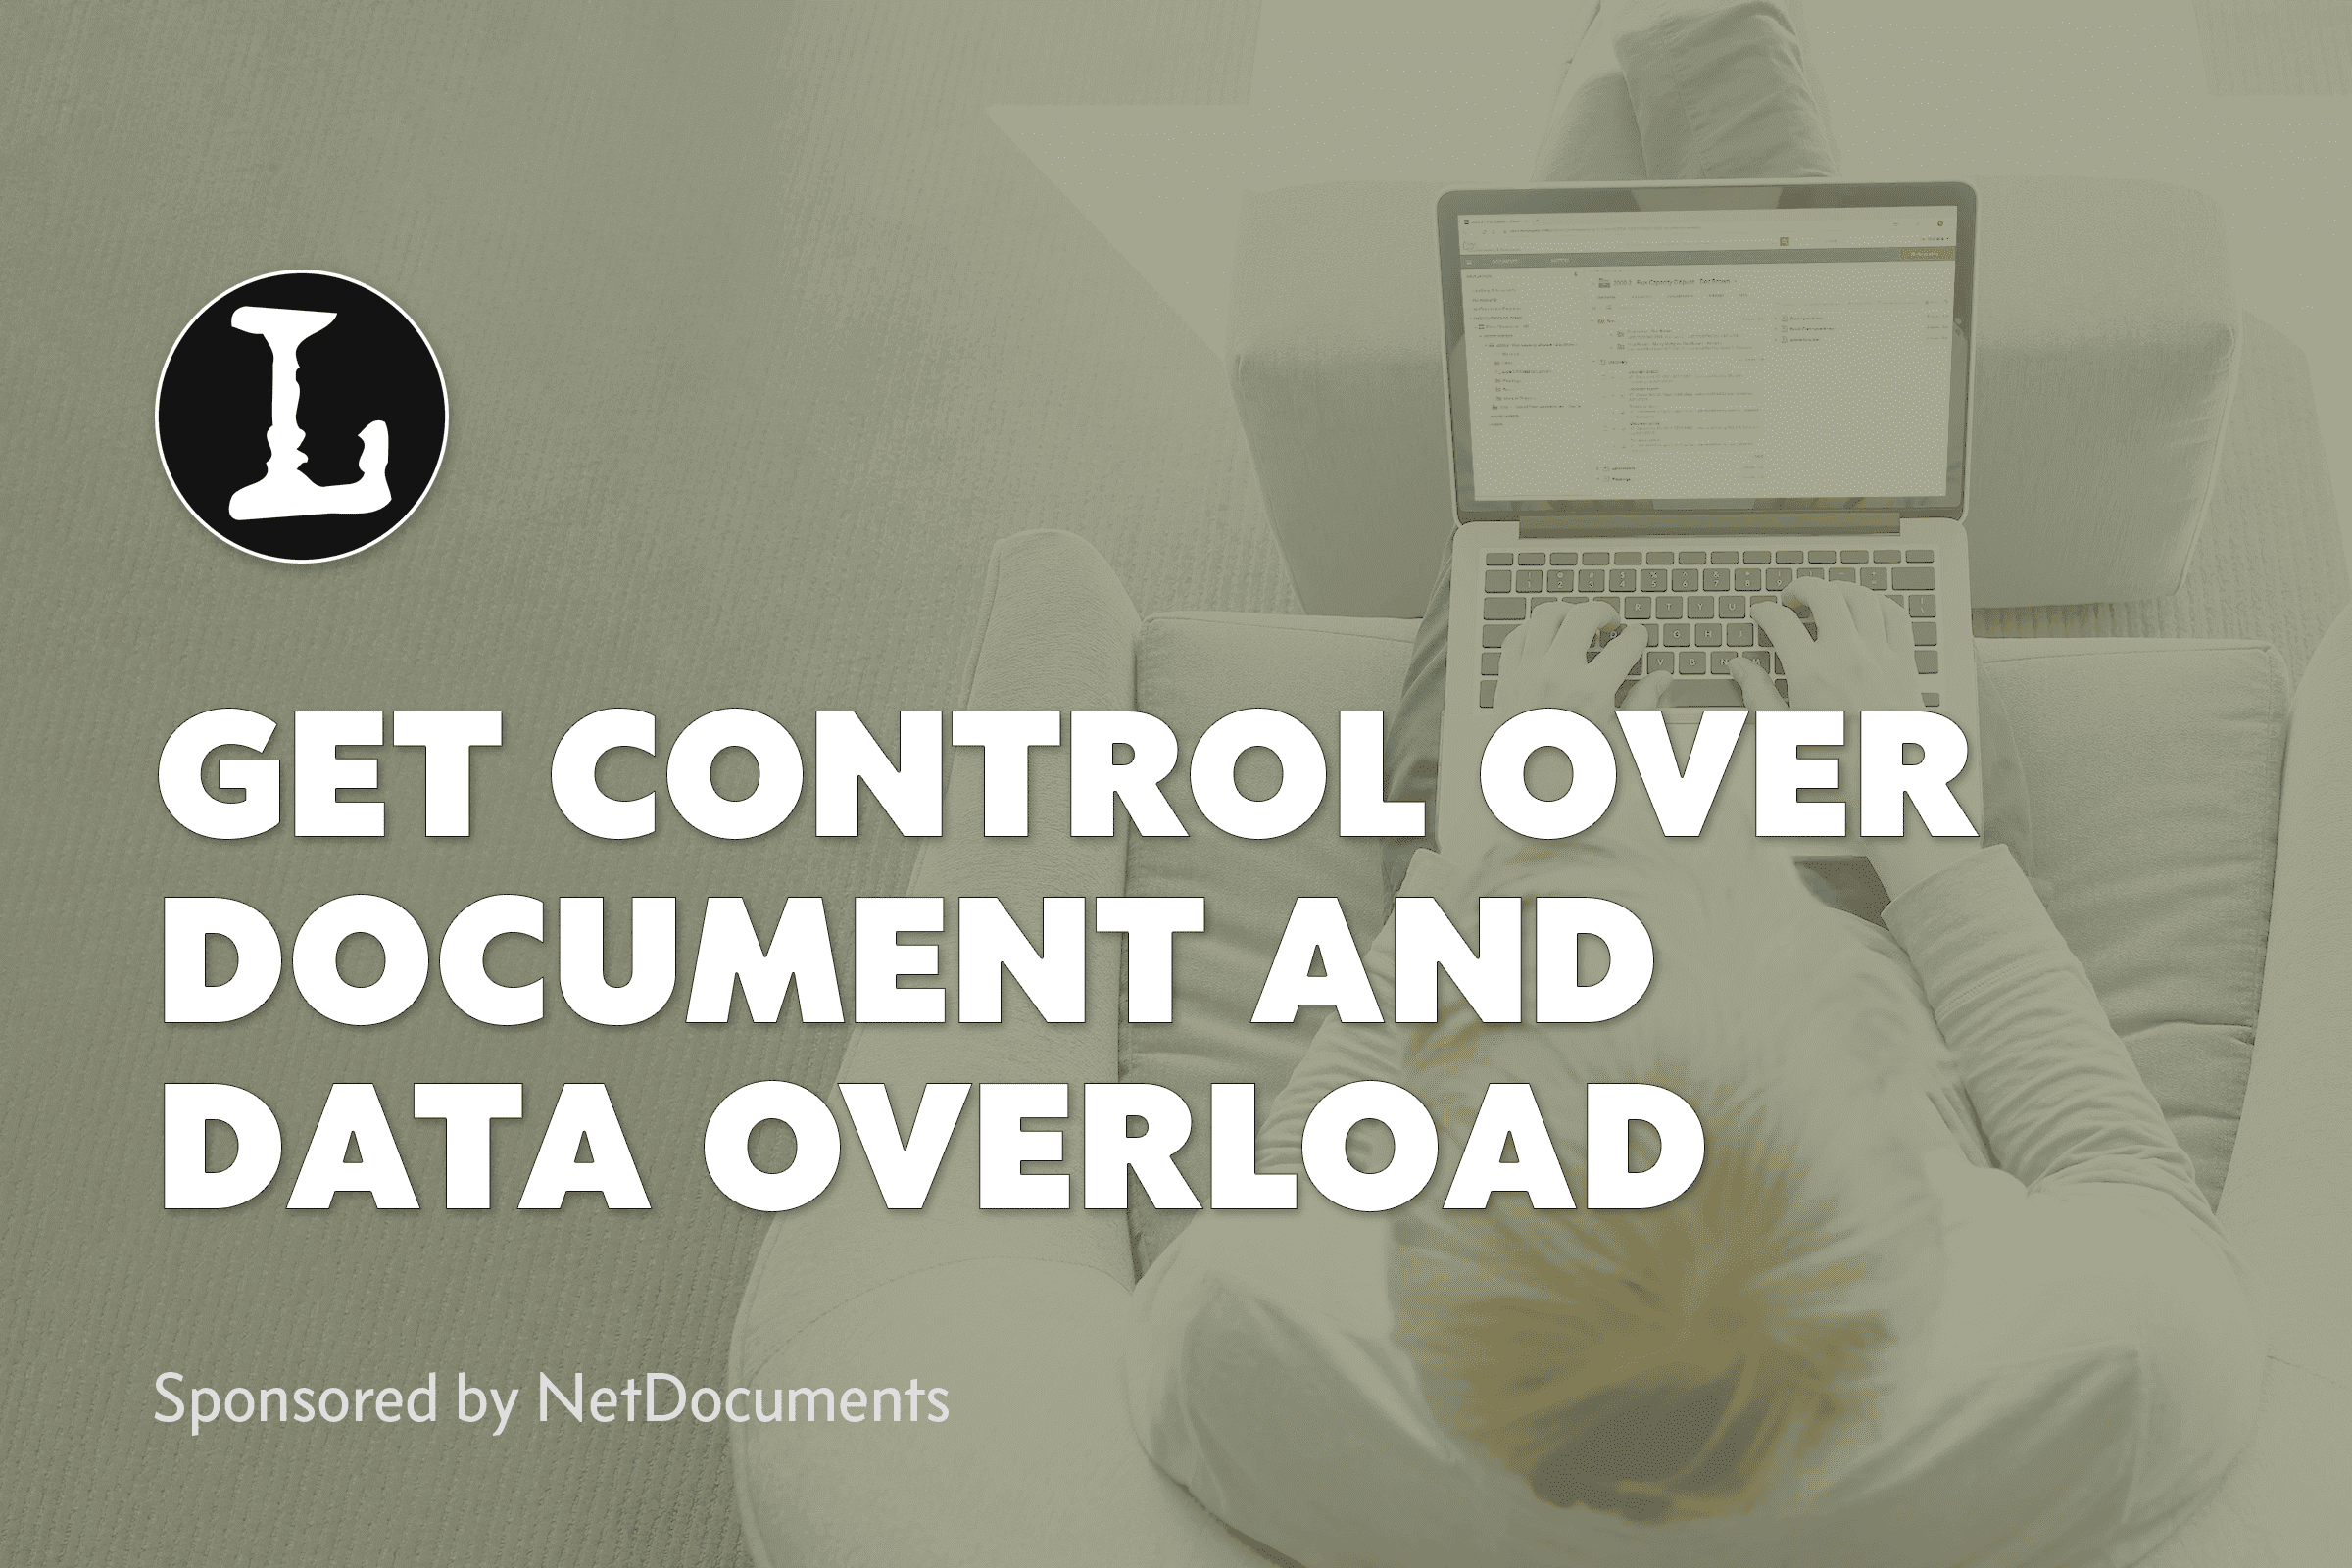 netdocuments data overload